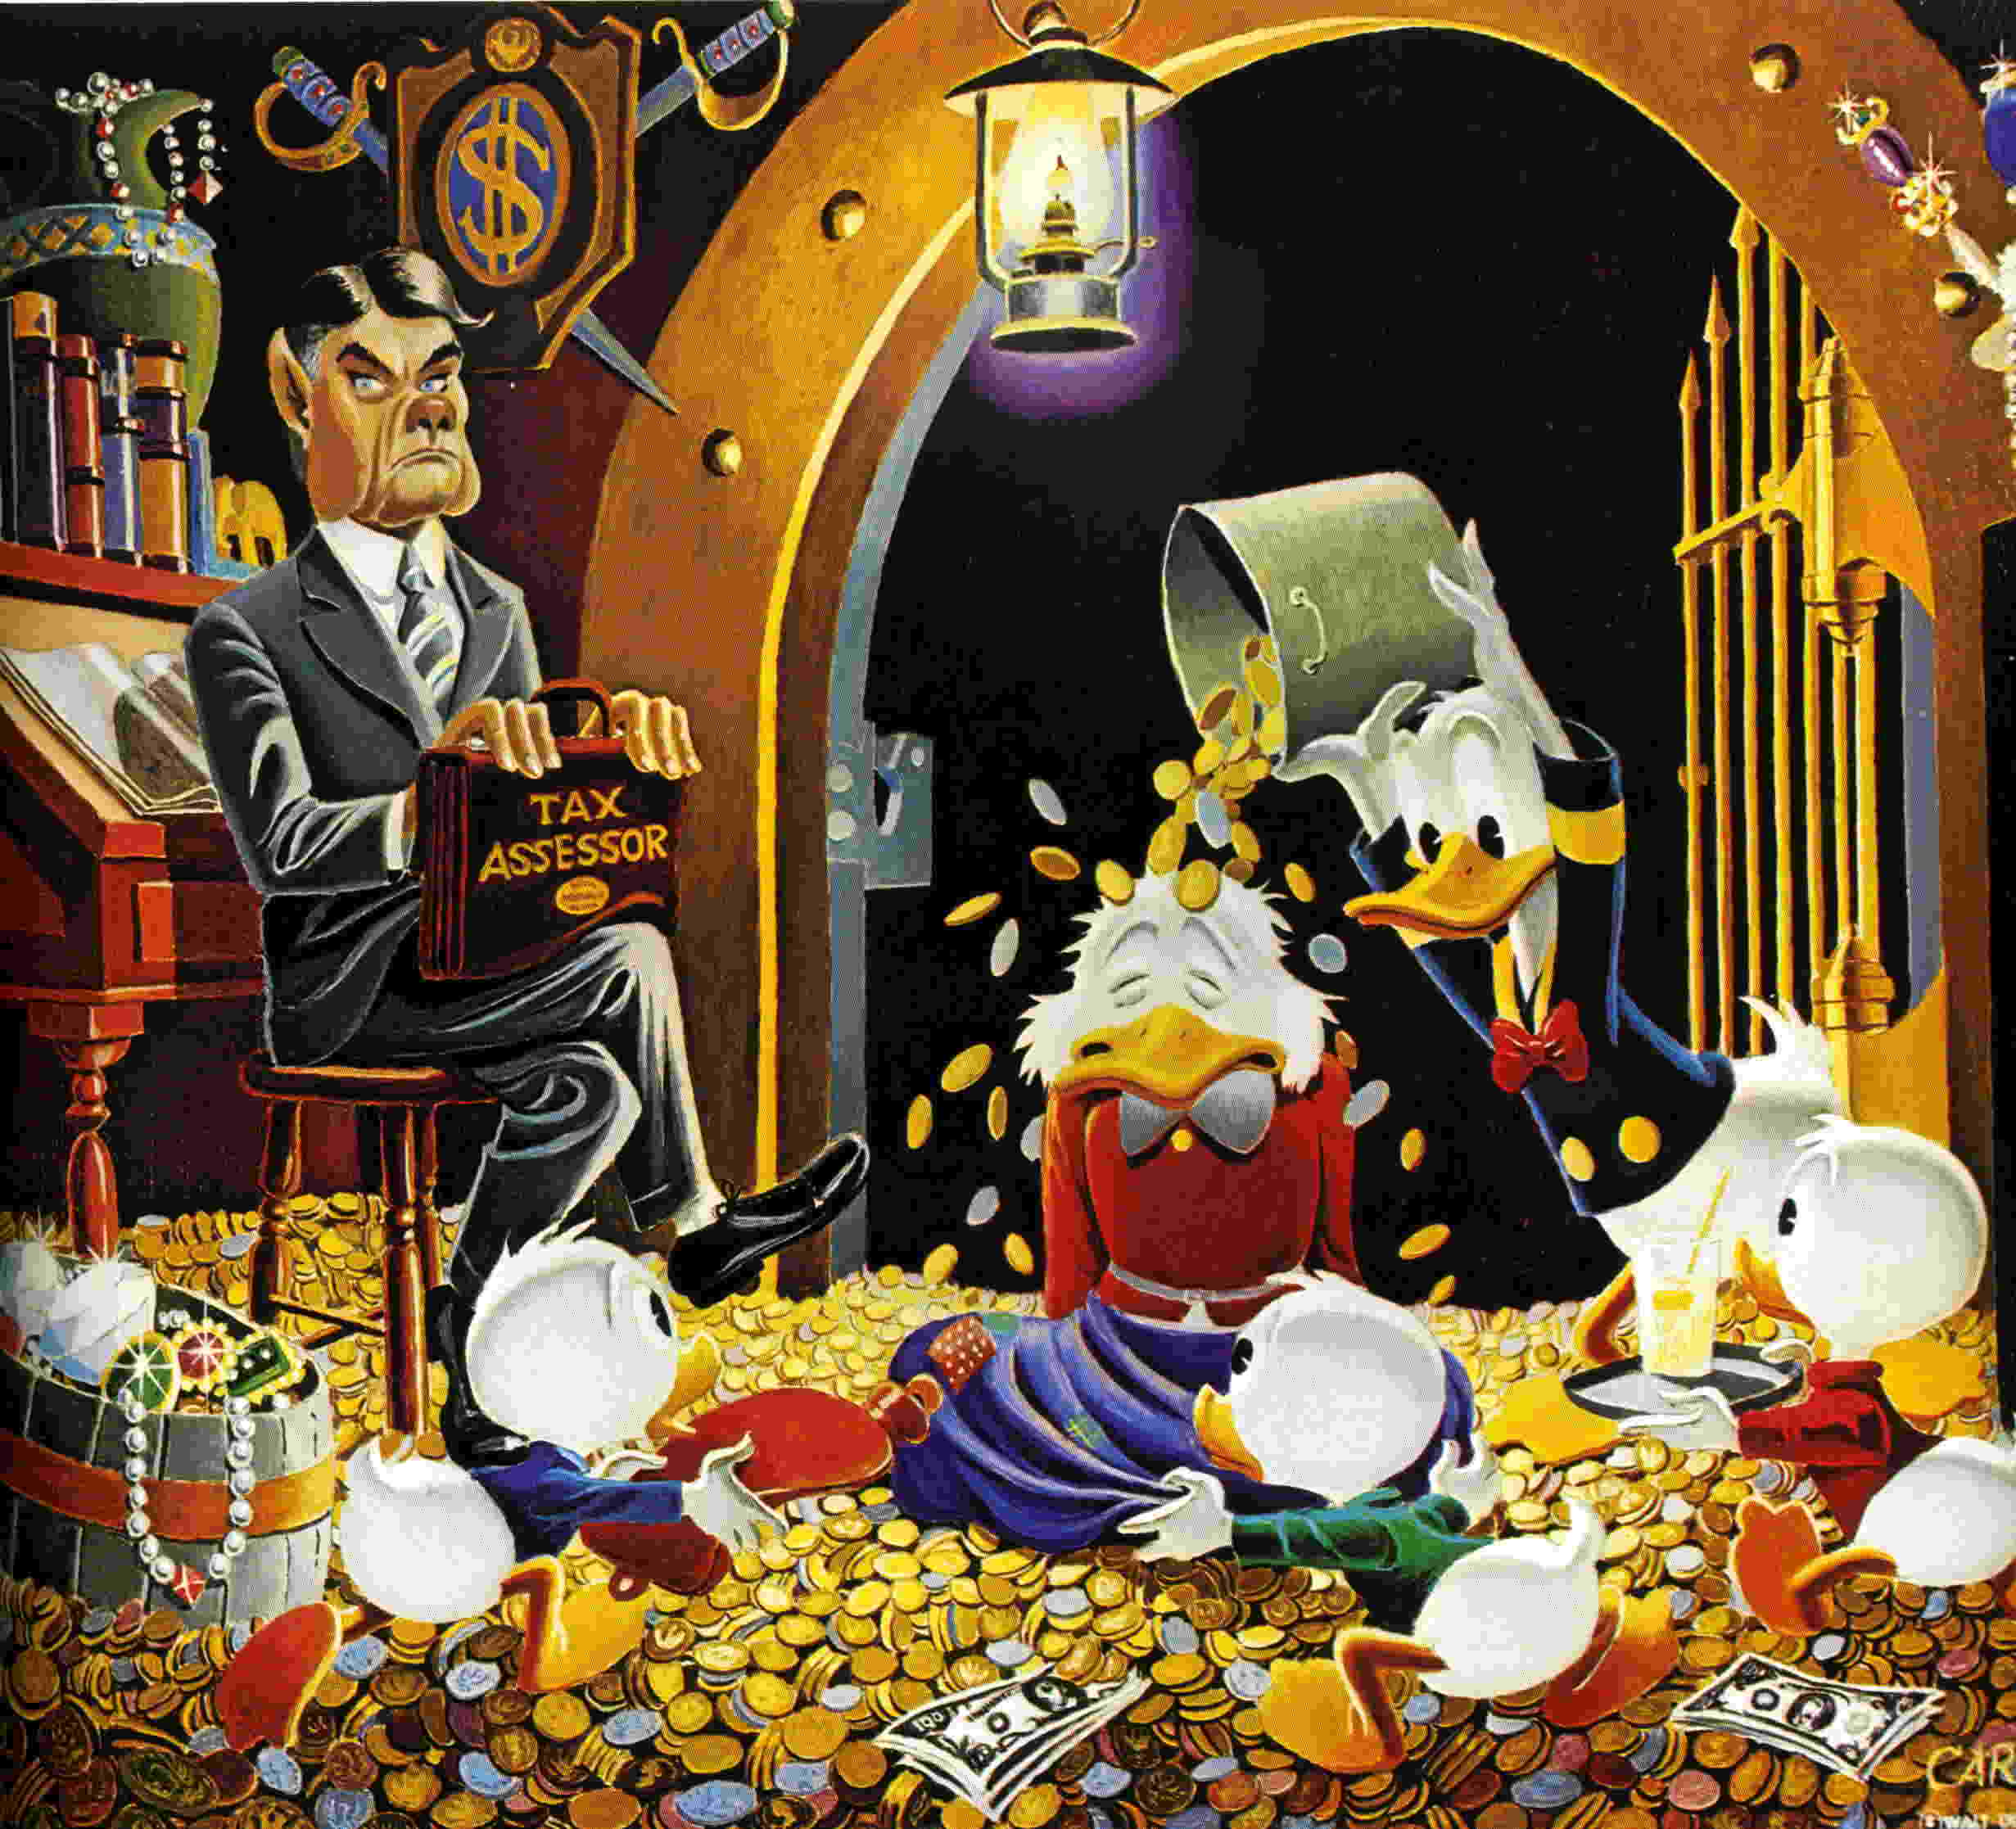 Scrooge Mcduck HD Wallpaper